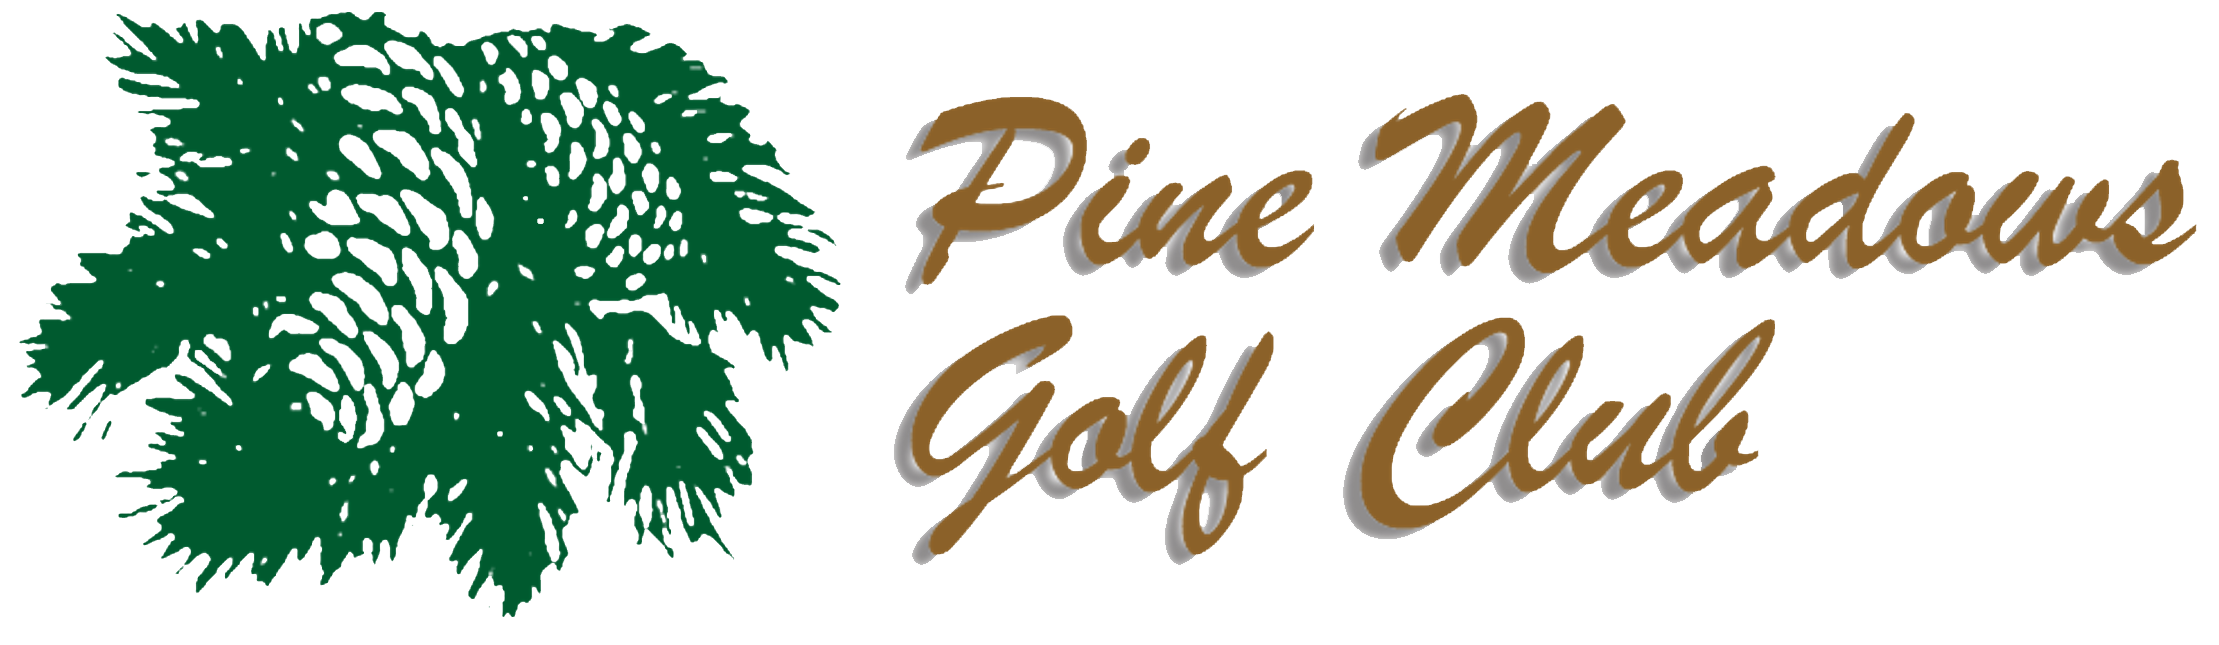 Pine Meadows Golf Club Logo Header